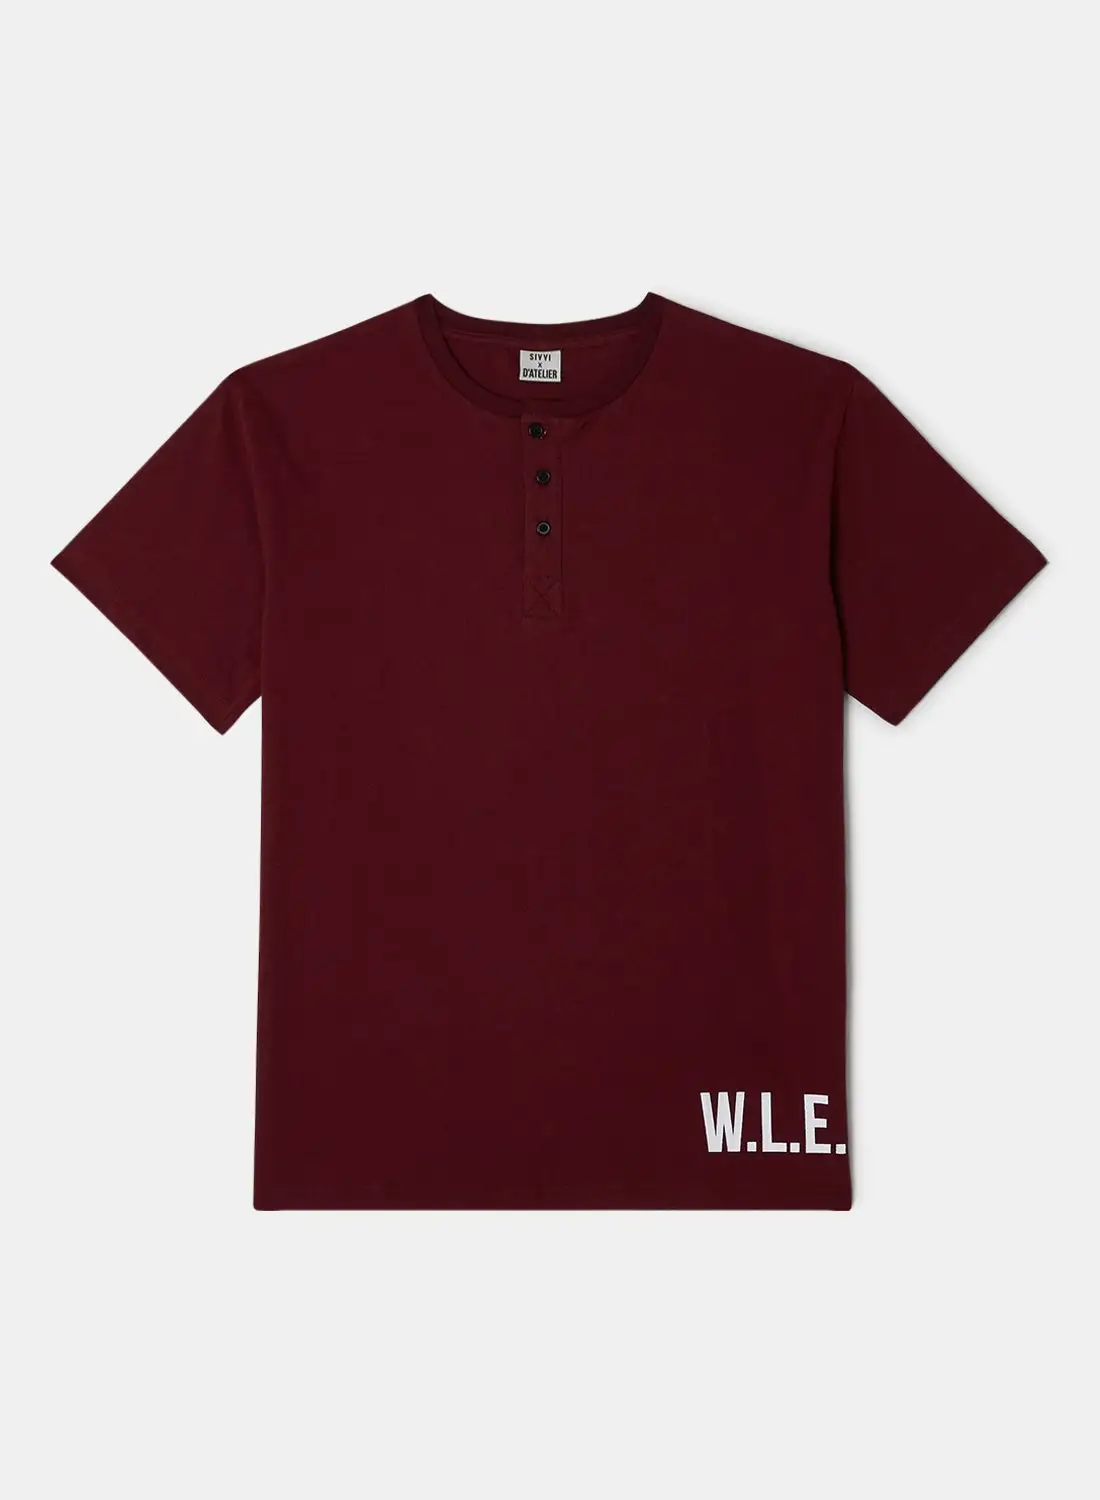 Sivvi x D'Atelier WLE Grandad T-Shirt Damson Red